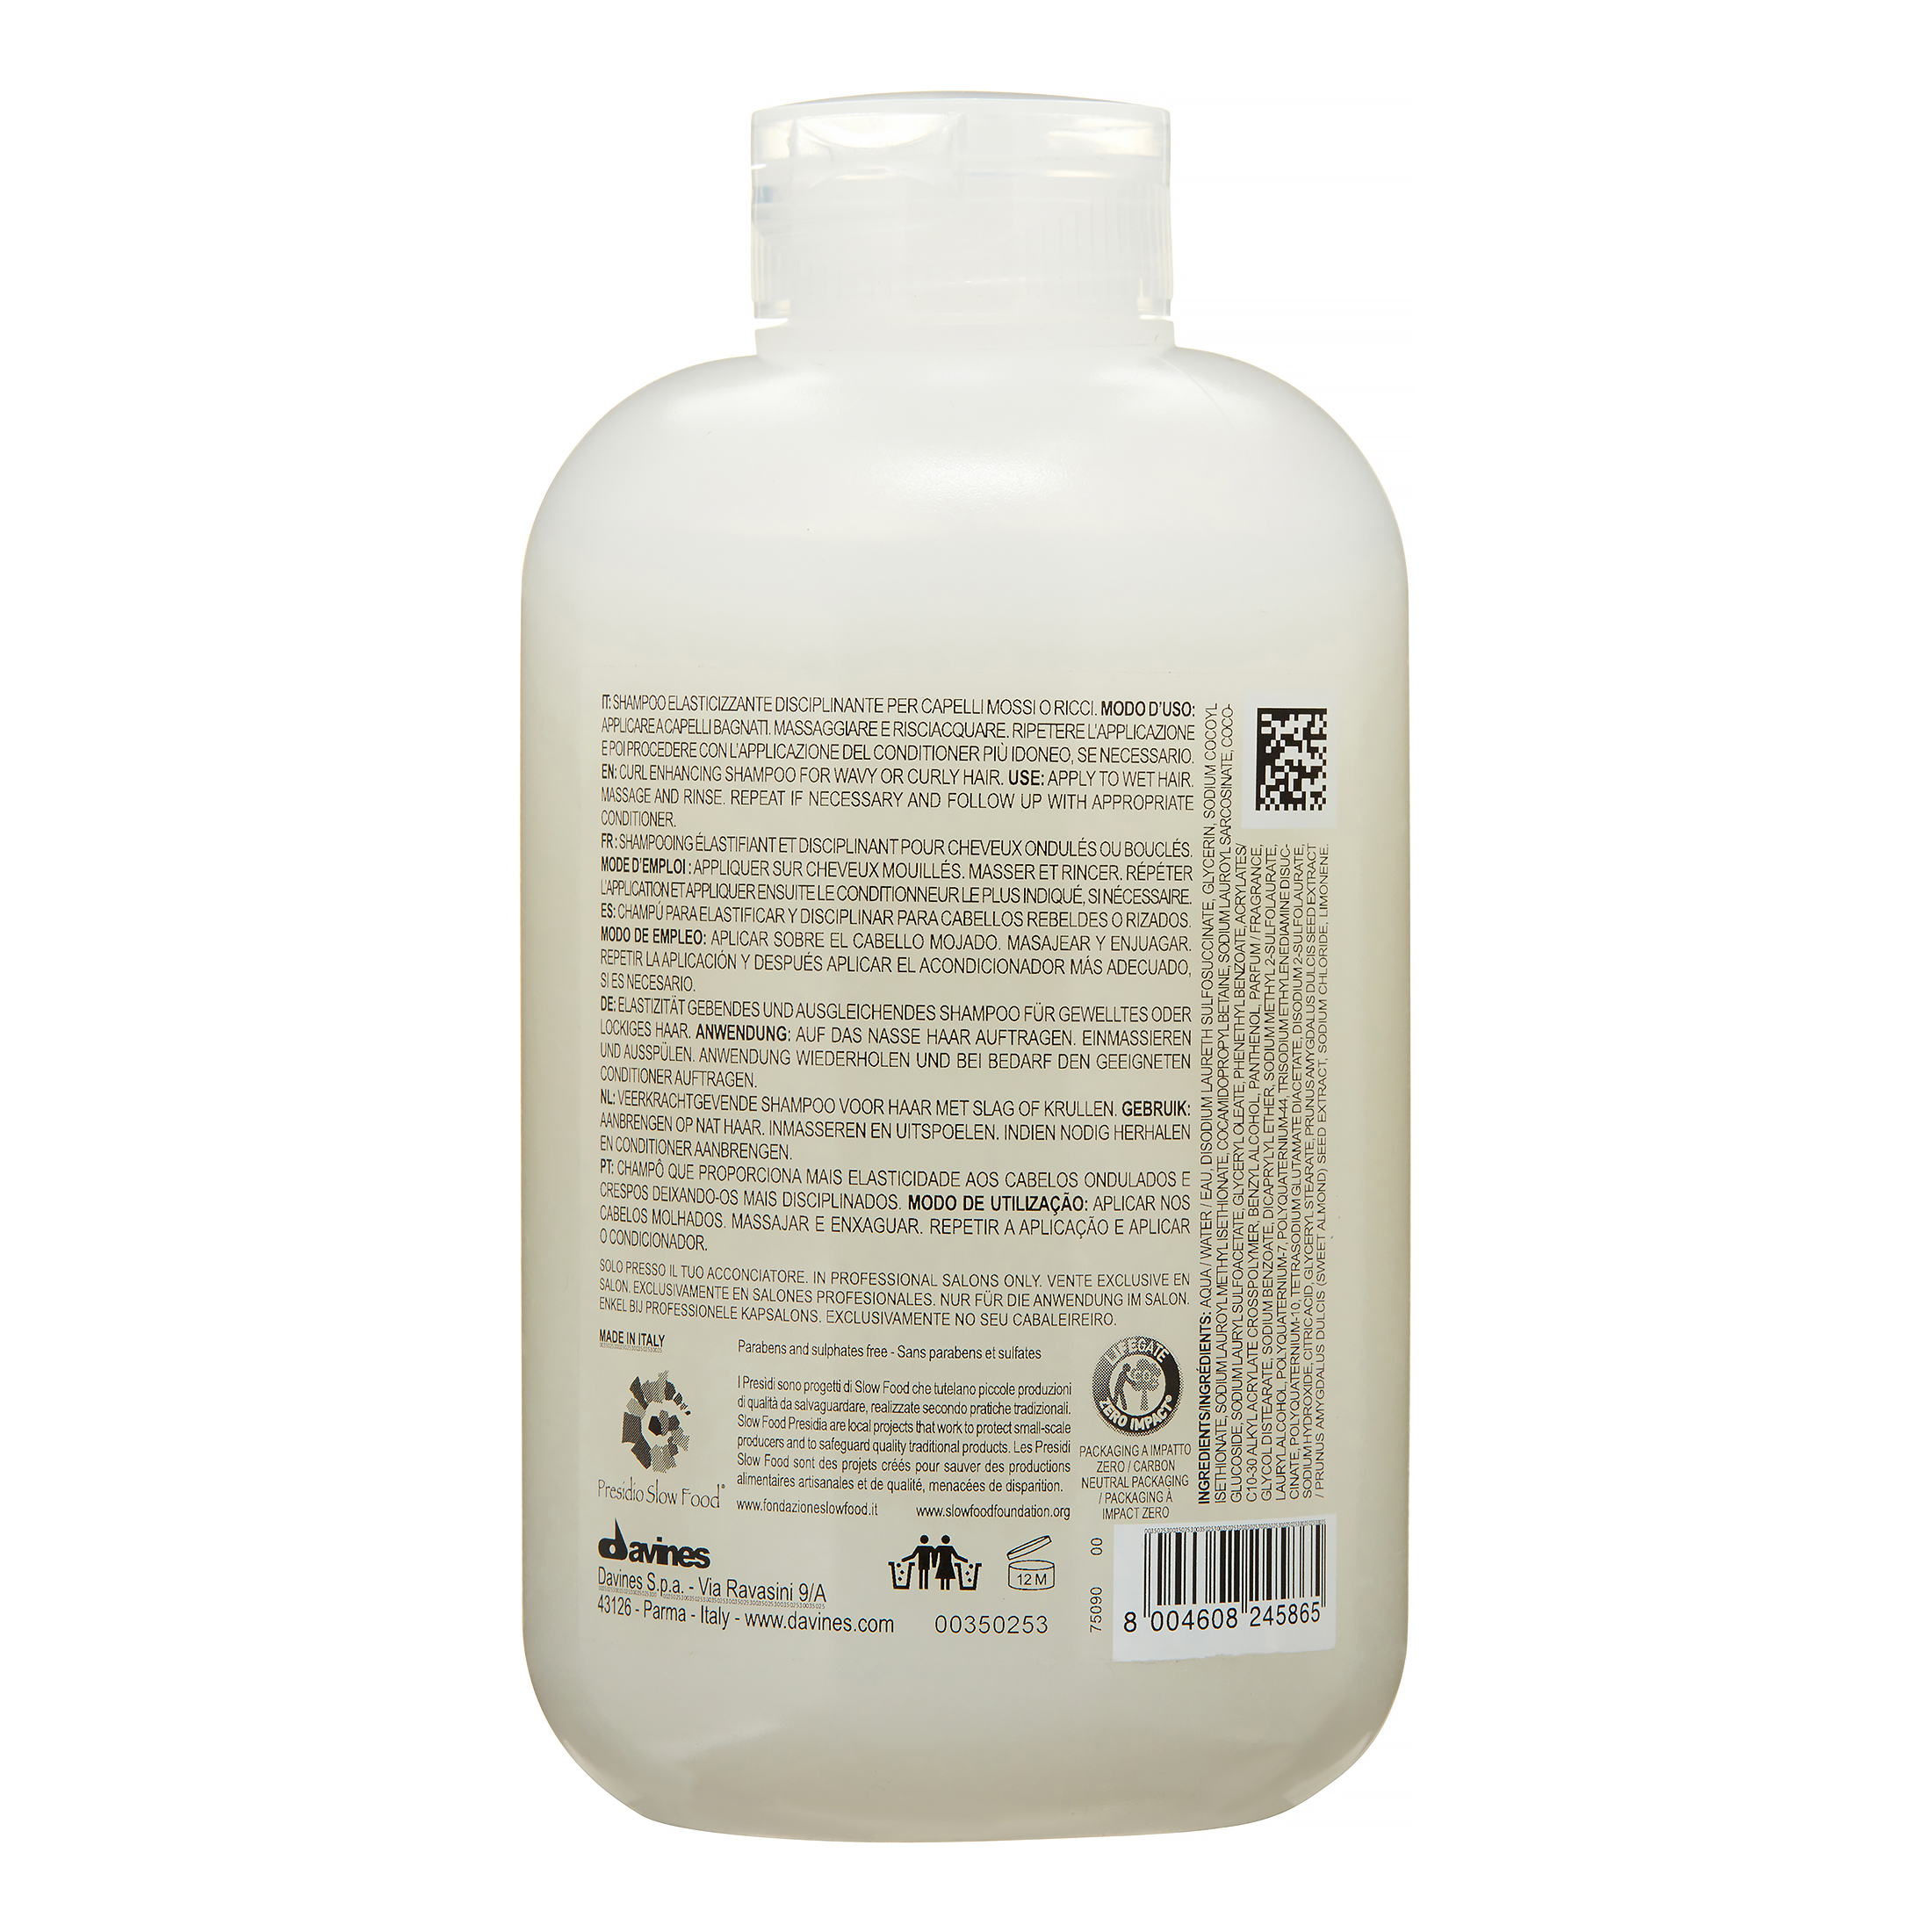 Davines Love Curl Enhancing Shampoo, 8.45 Fl Oz - image 3 of 3